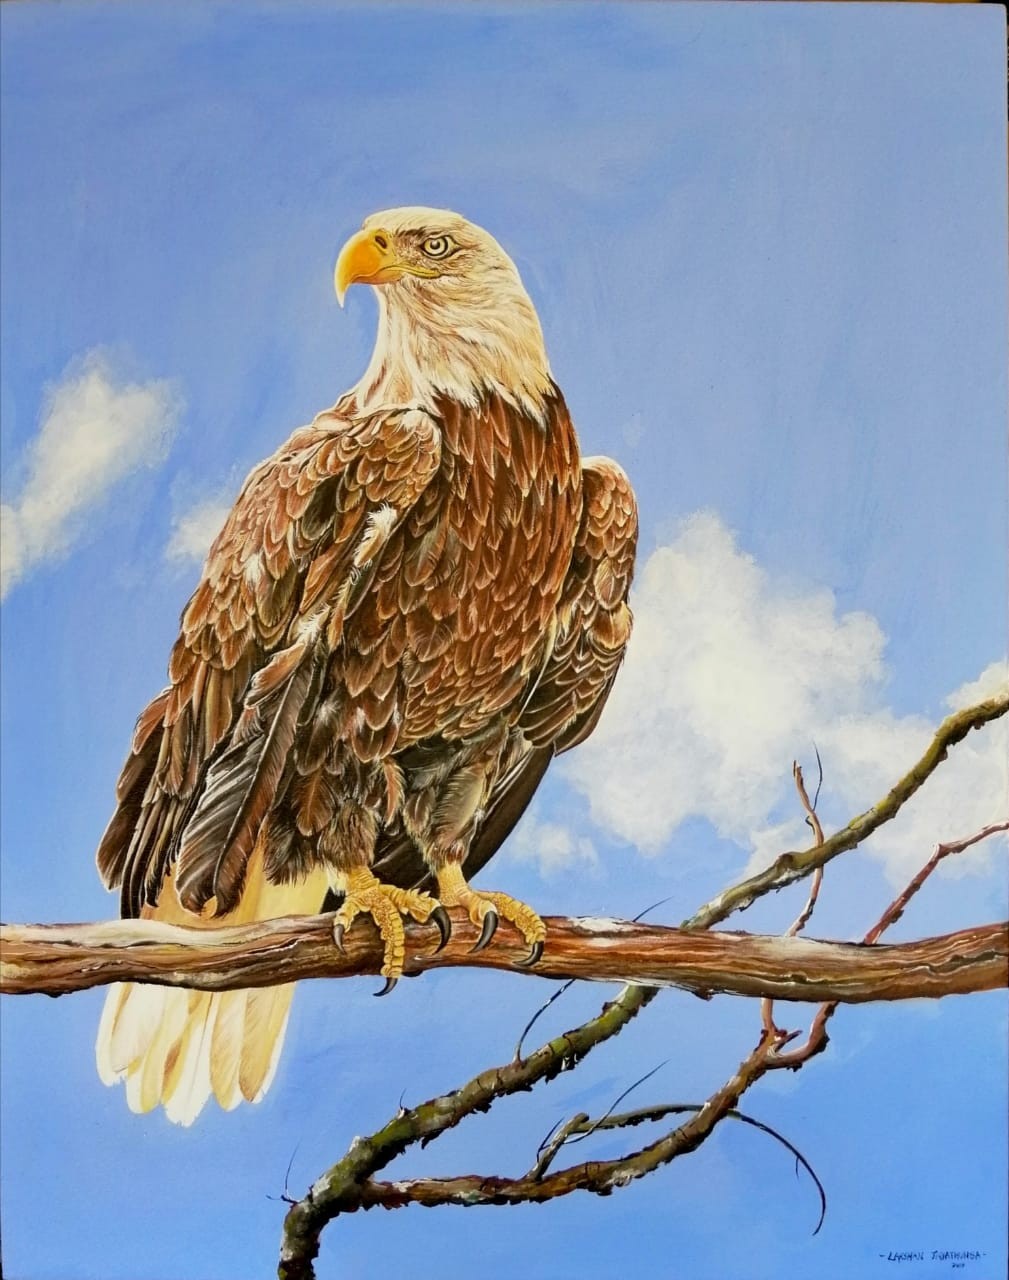 The eagle by Prabhani Amandika